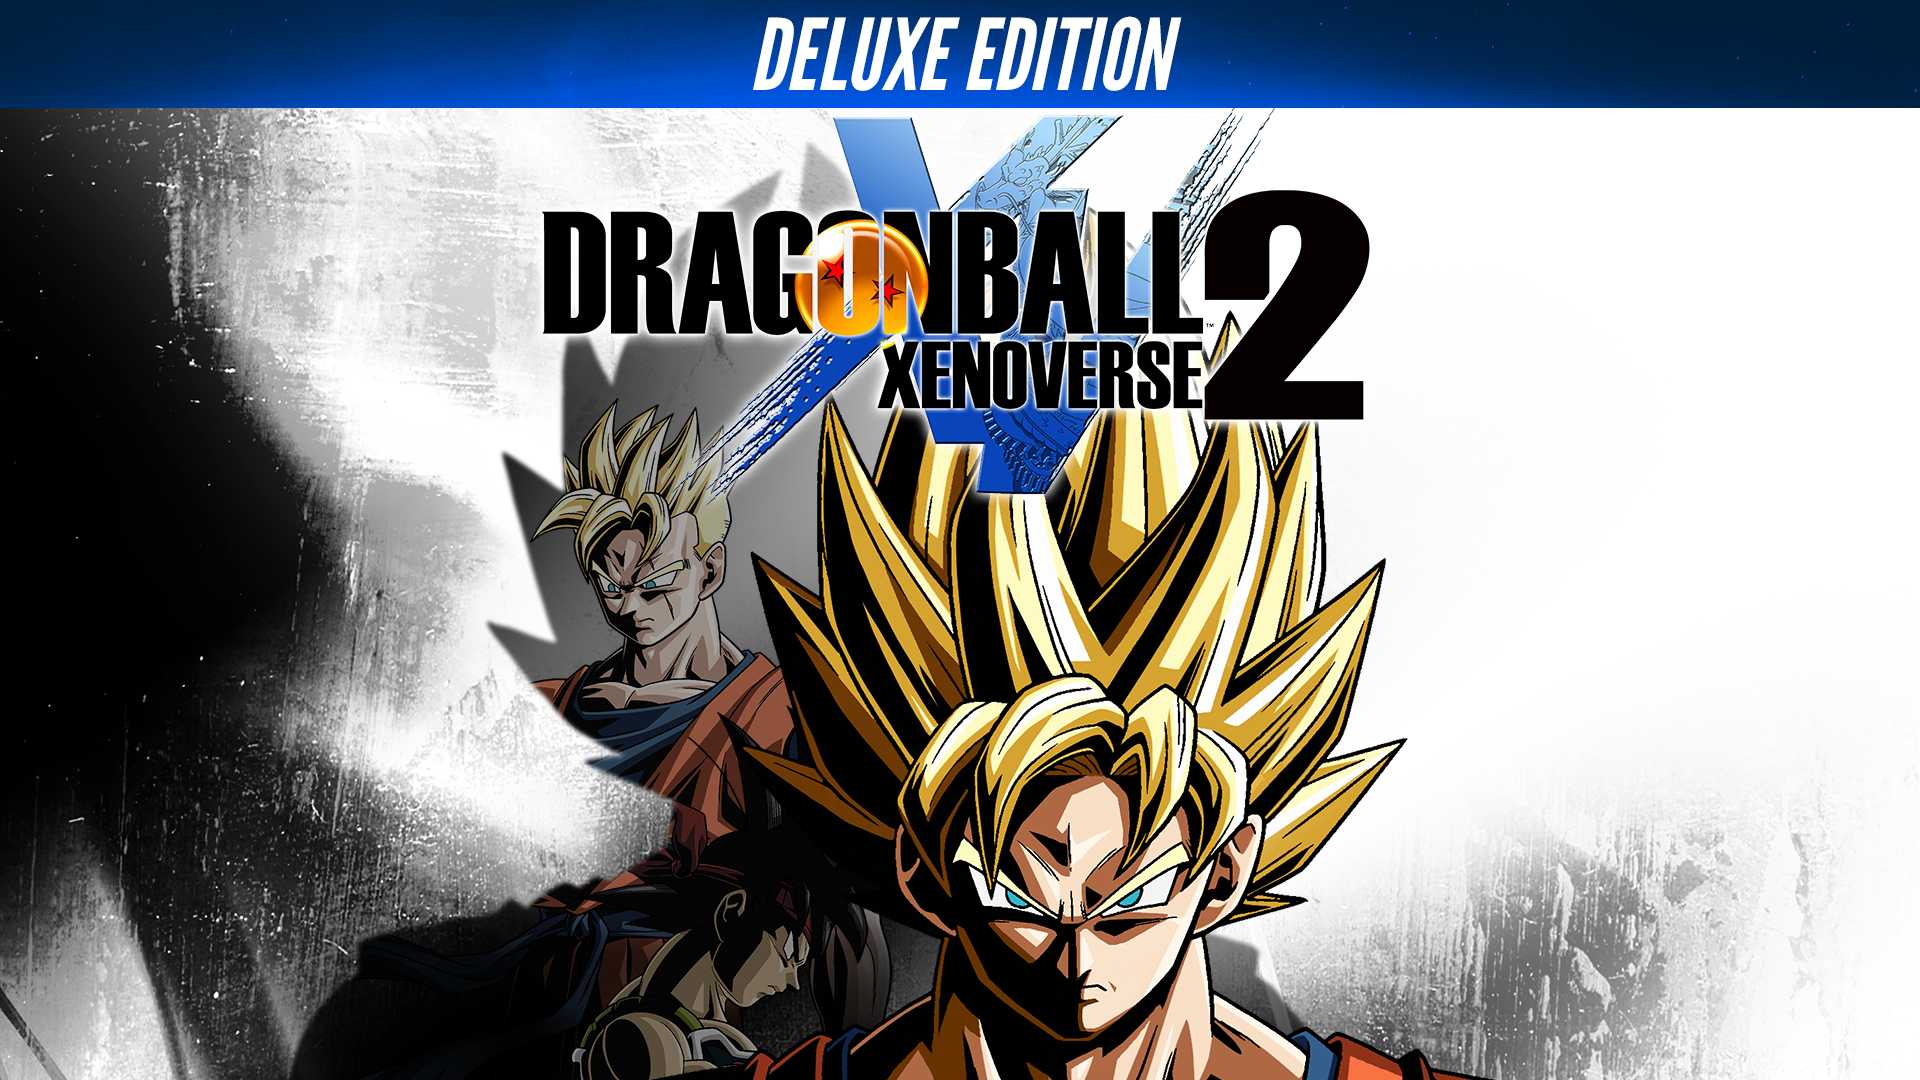 Buy DRAGON BALL XENOVERSE 2 - Extra DLC Pack 4 - Microsoft Store en-IL